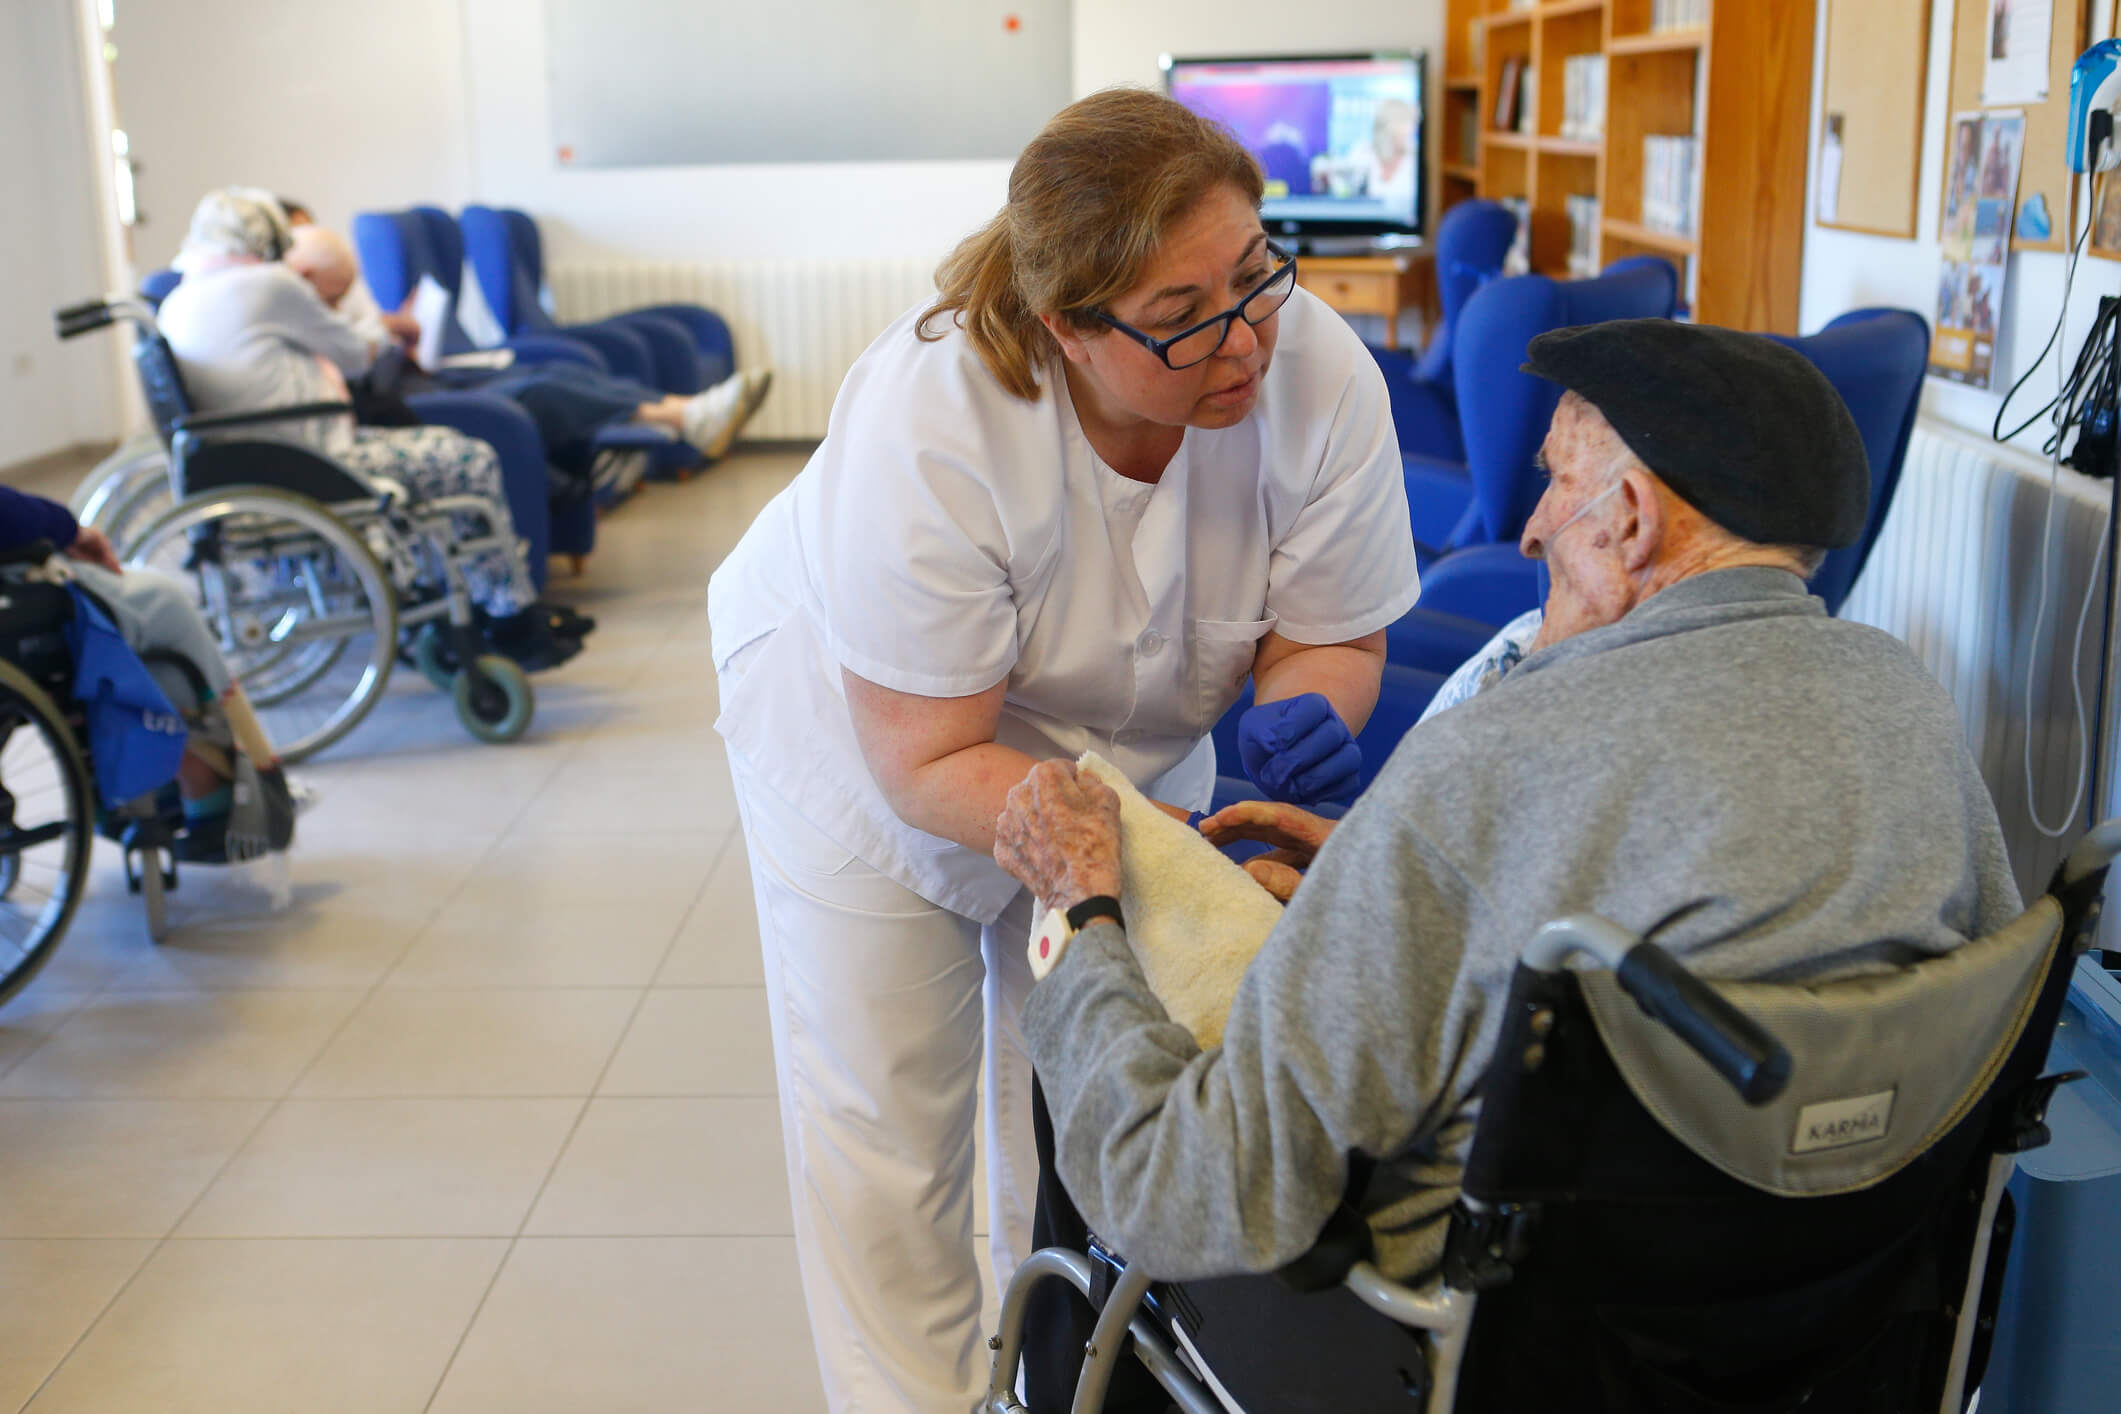 Nurse assisting the senior citizen